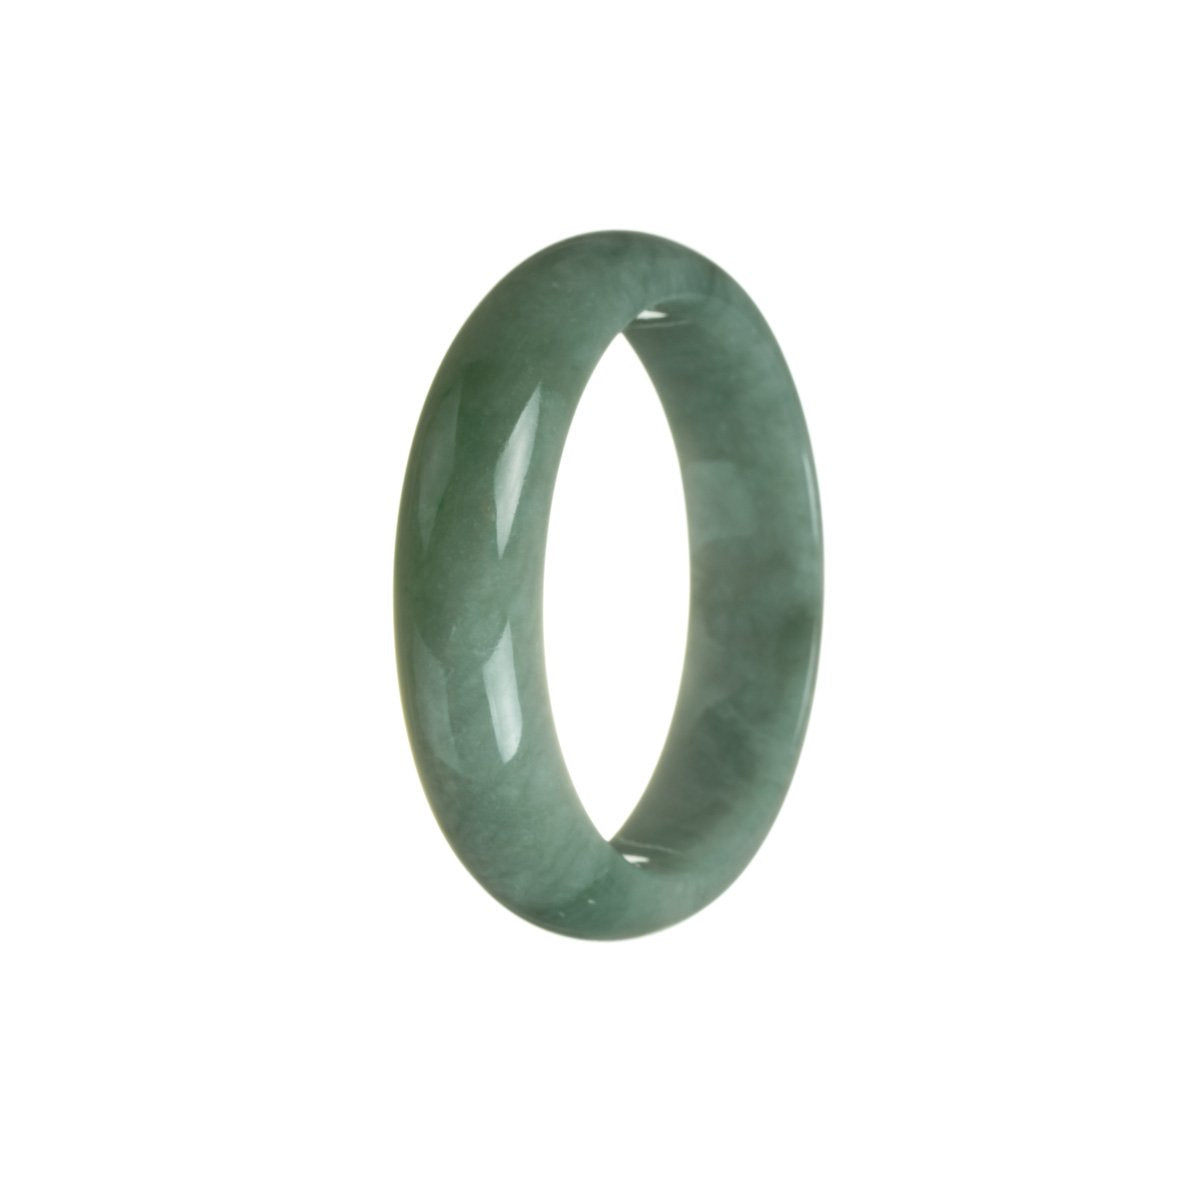 Certified Grade A Green Jadeite Bangle Bracelet - 58mm Oval